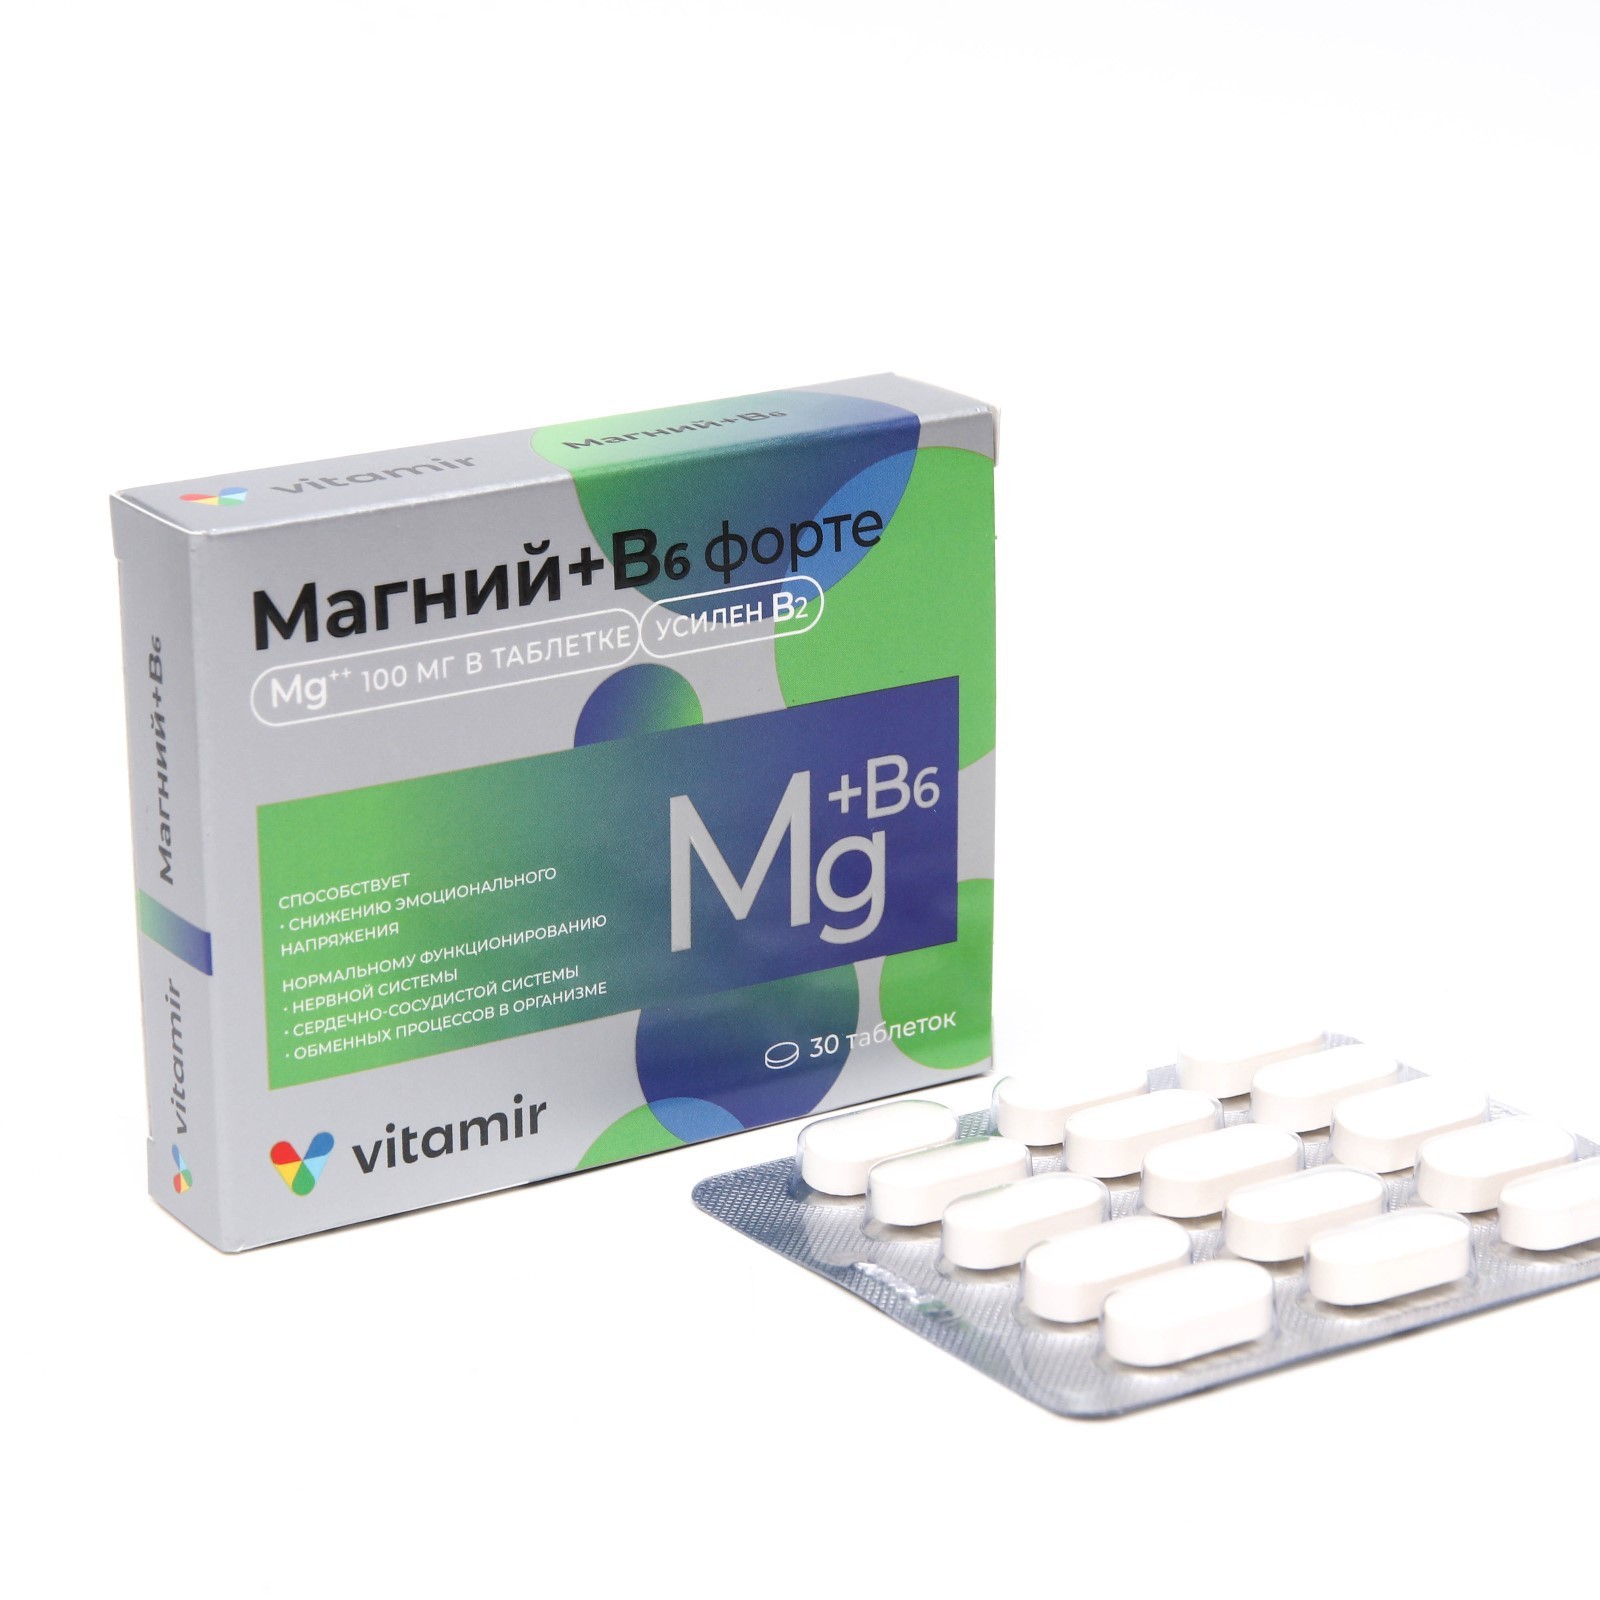 Таблетки элита. Magnesium b6 Forte. Магний б6 форте 100 мг. Магний форте в6 форте витамир.